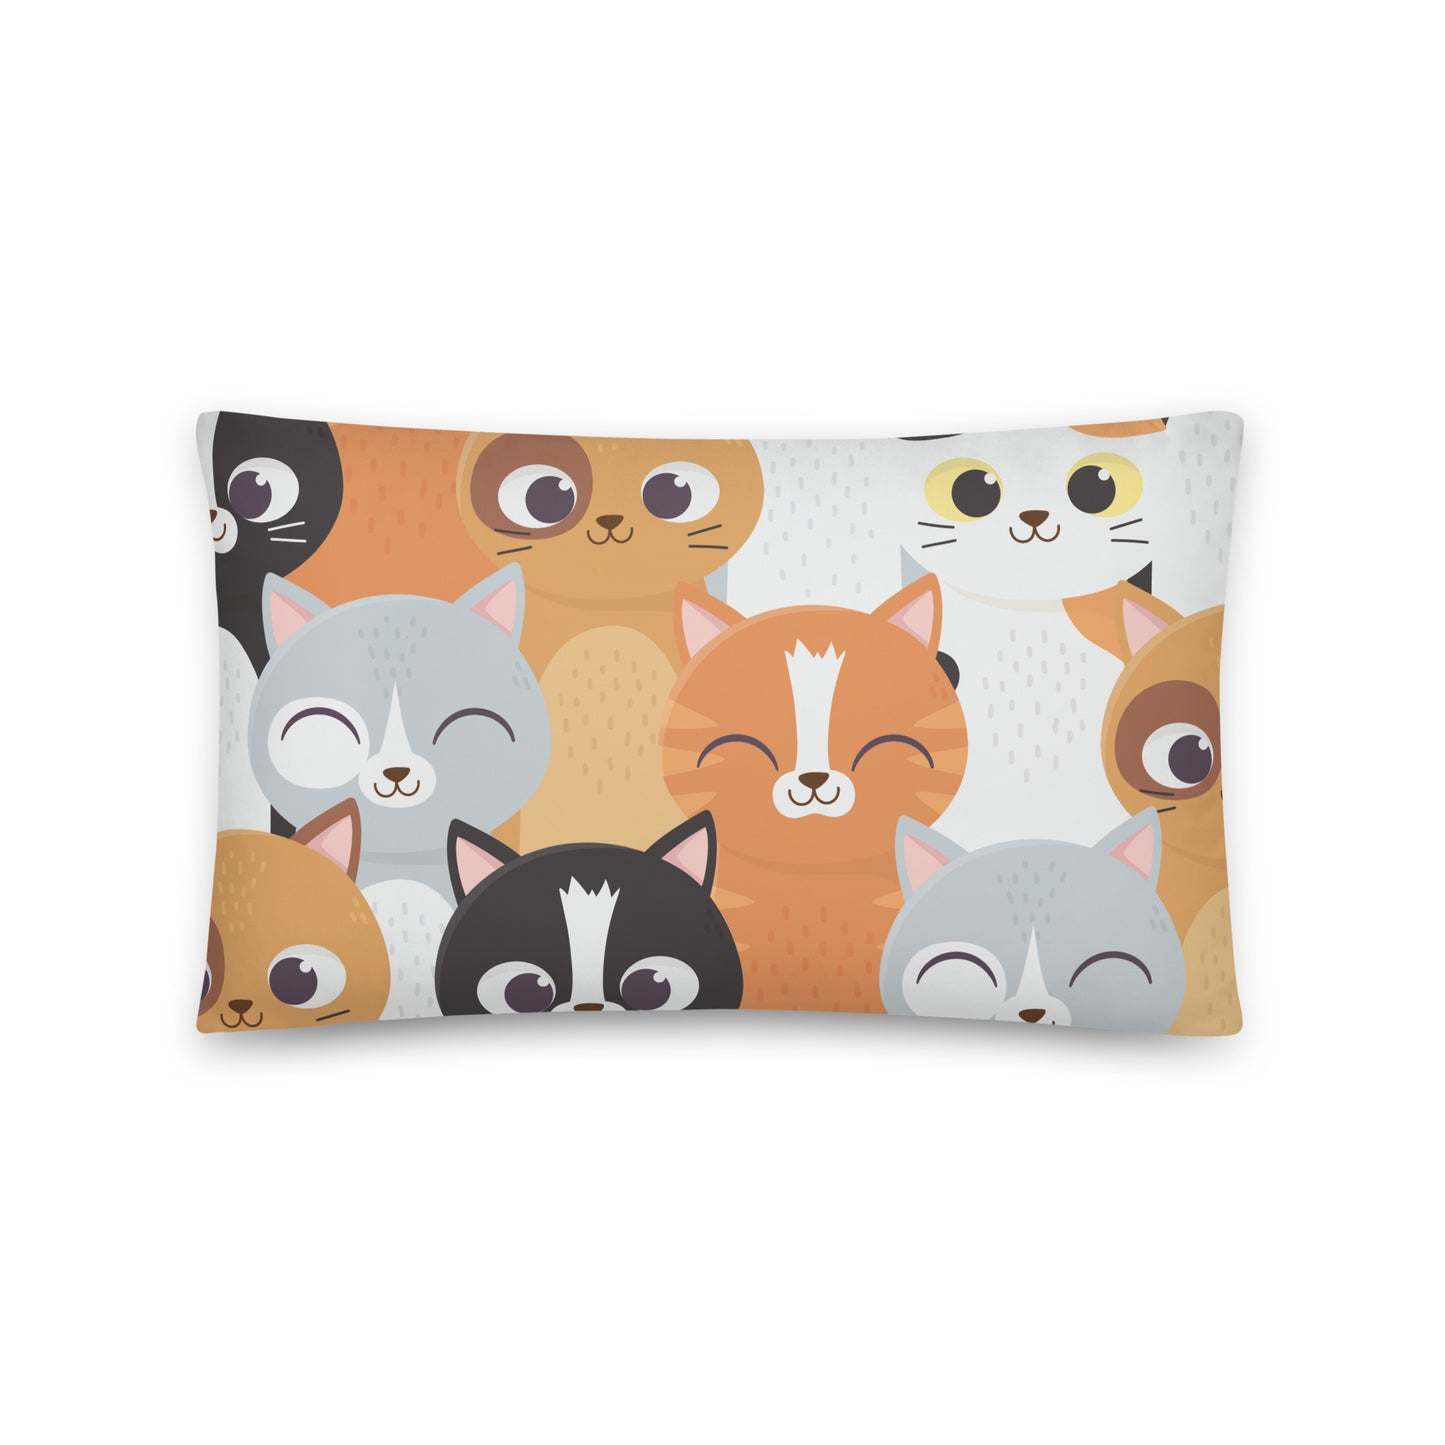 Cats Family - Sustainably Made Pillows